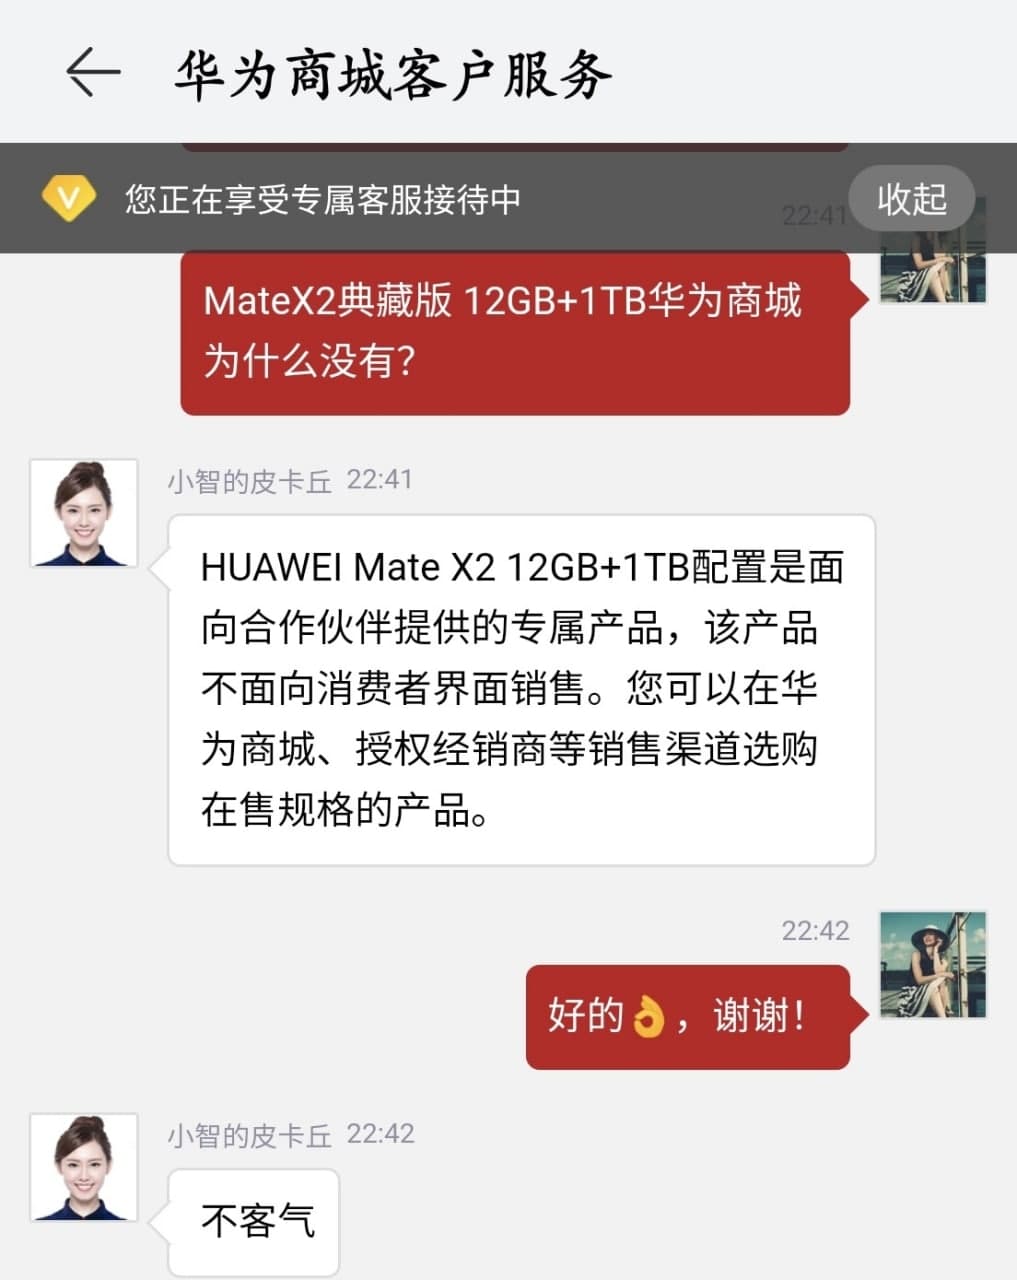 Huawei Mate X2 1tb confirmed